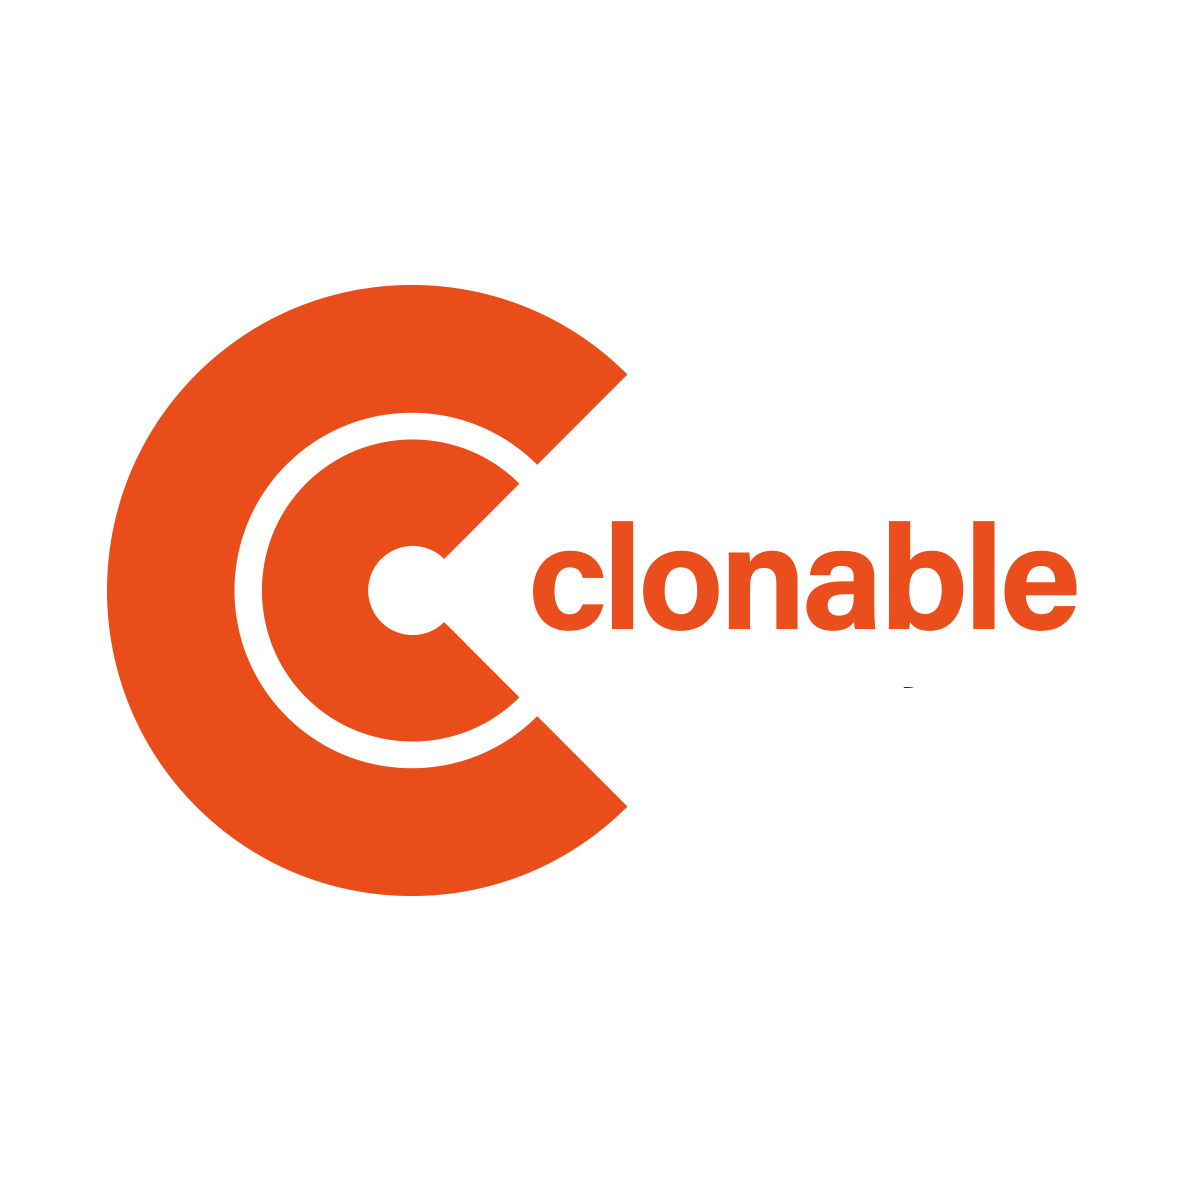 Clonable logo-ul fundal luminos